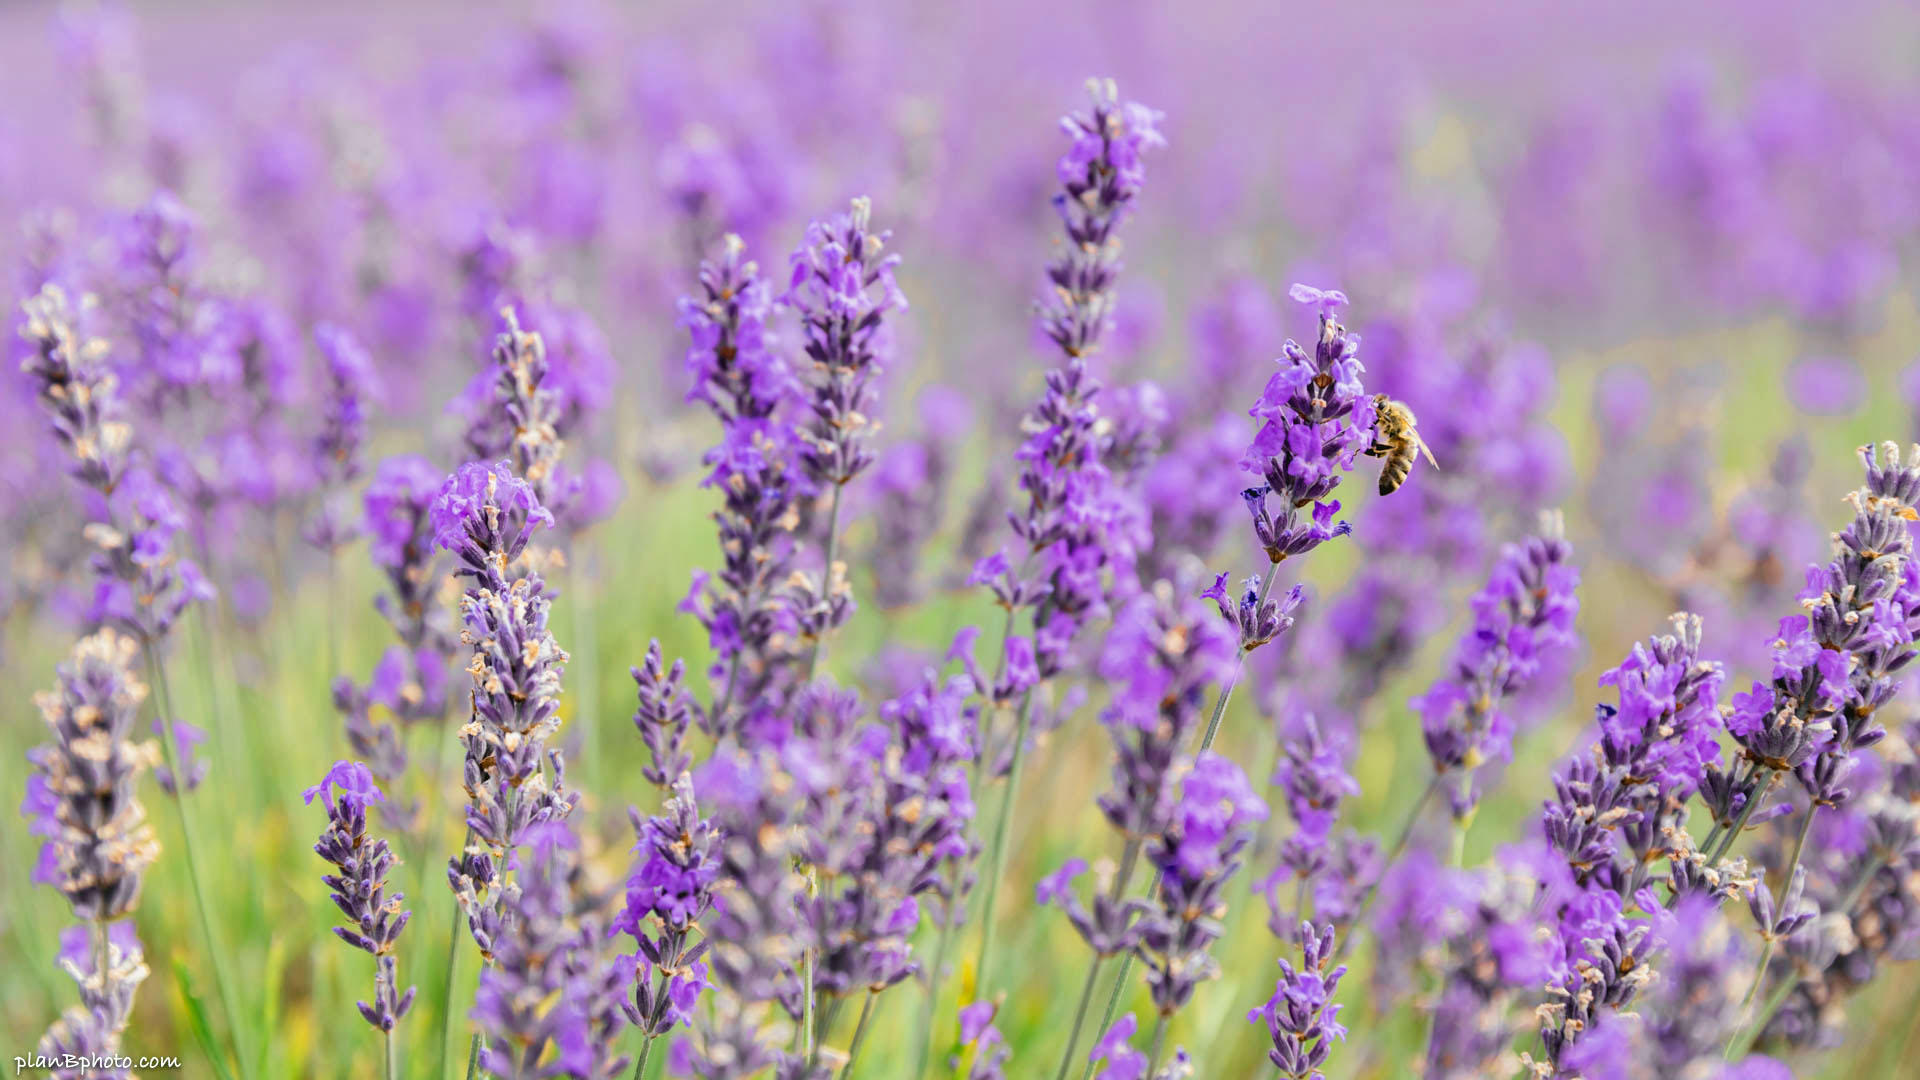 Honey bee on purple lavender flowers at Mayfield Lavender Field in London, UK